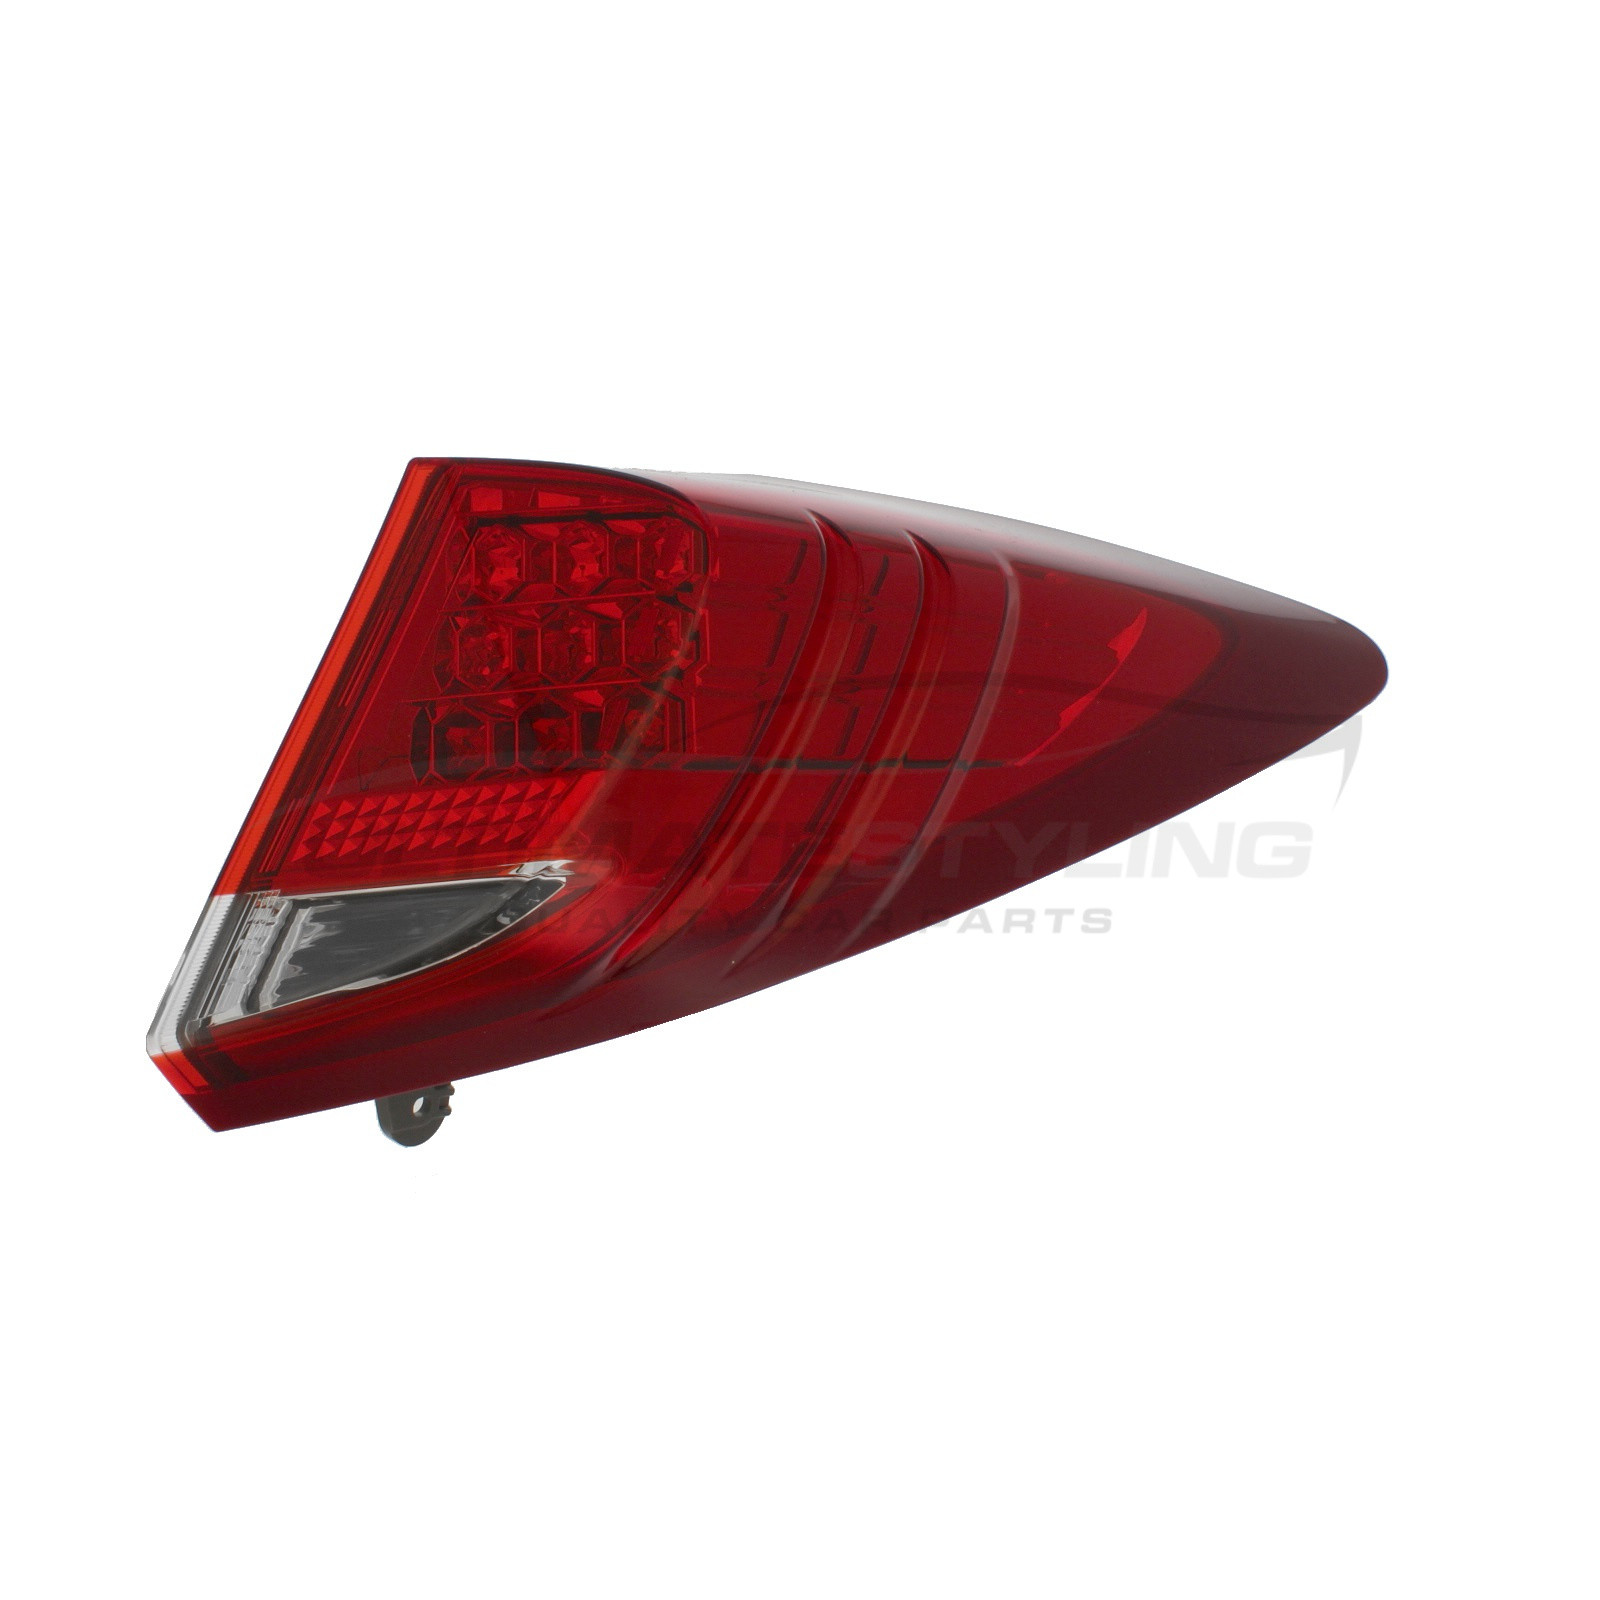 Rear Light / Tail Light for Honda Civic